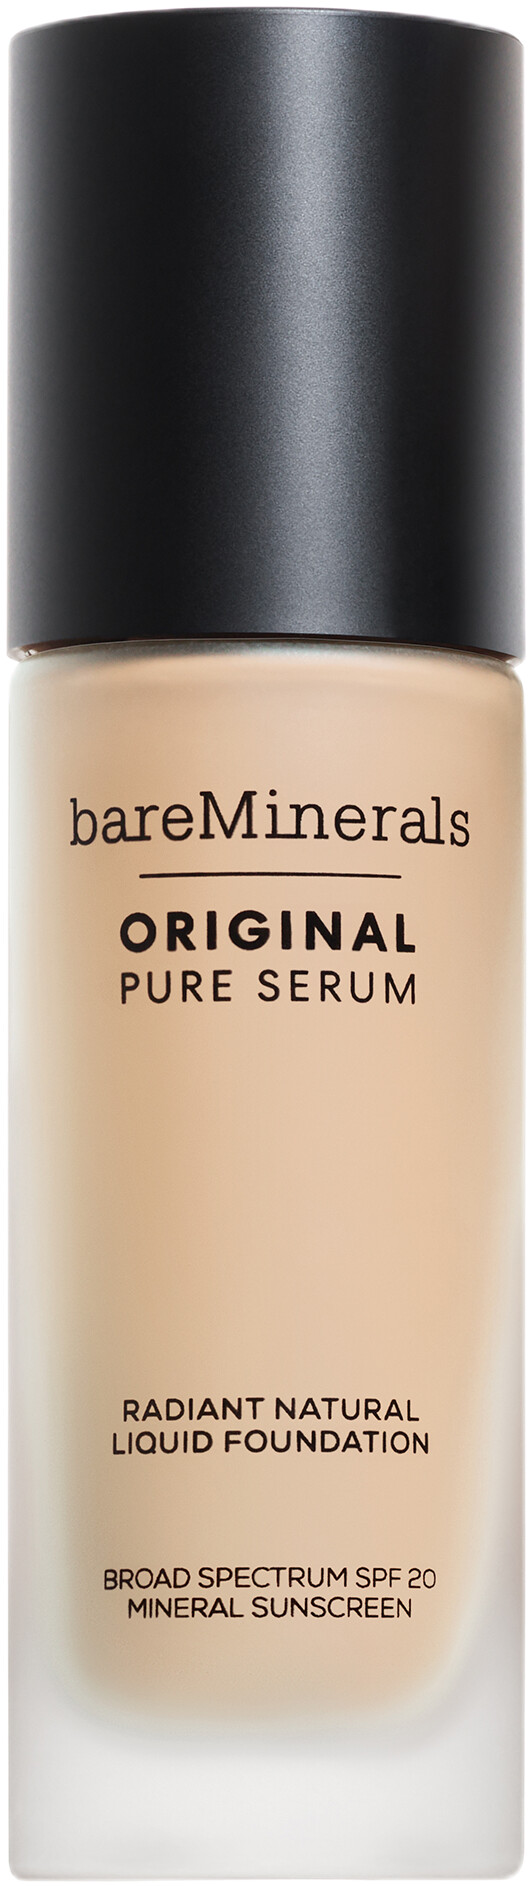 bareMinerals Original Pure Serum Radiant Natural Liquid Foundation SPF20 30ml 6 - Deep Cool